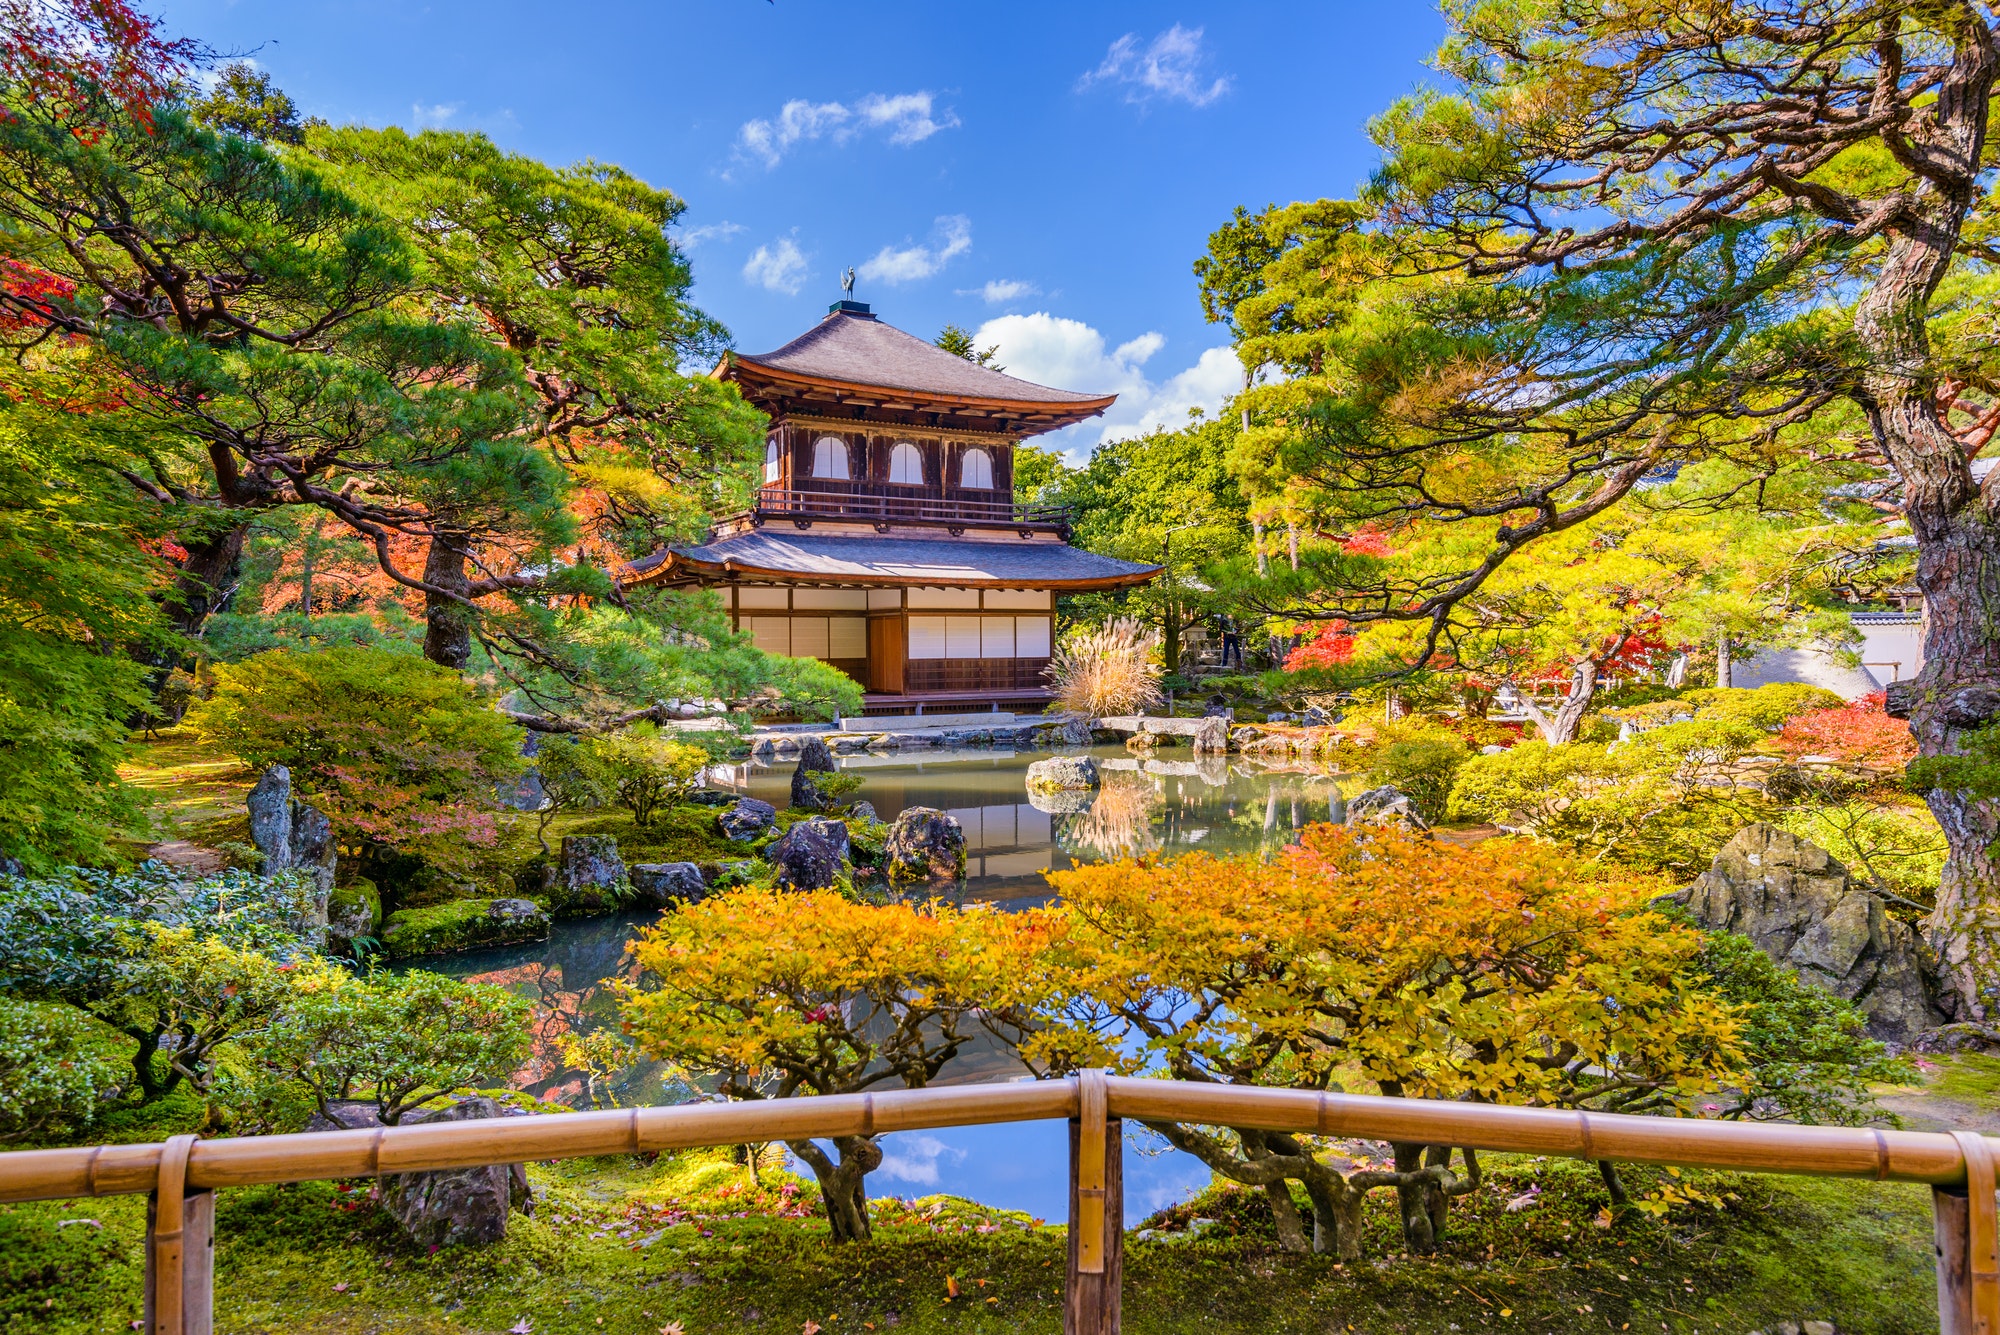 Ginkaku-ji Temple in Kyoto